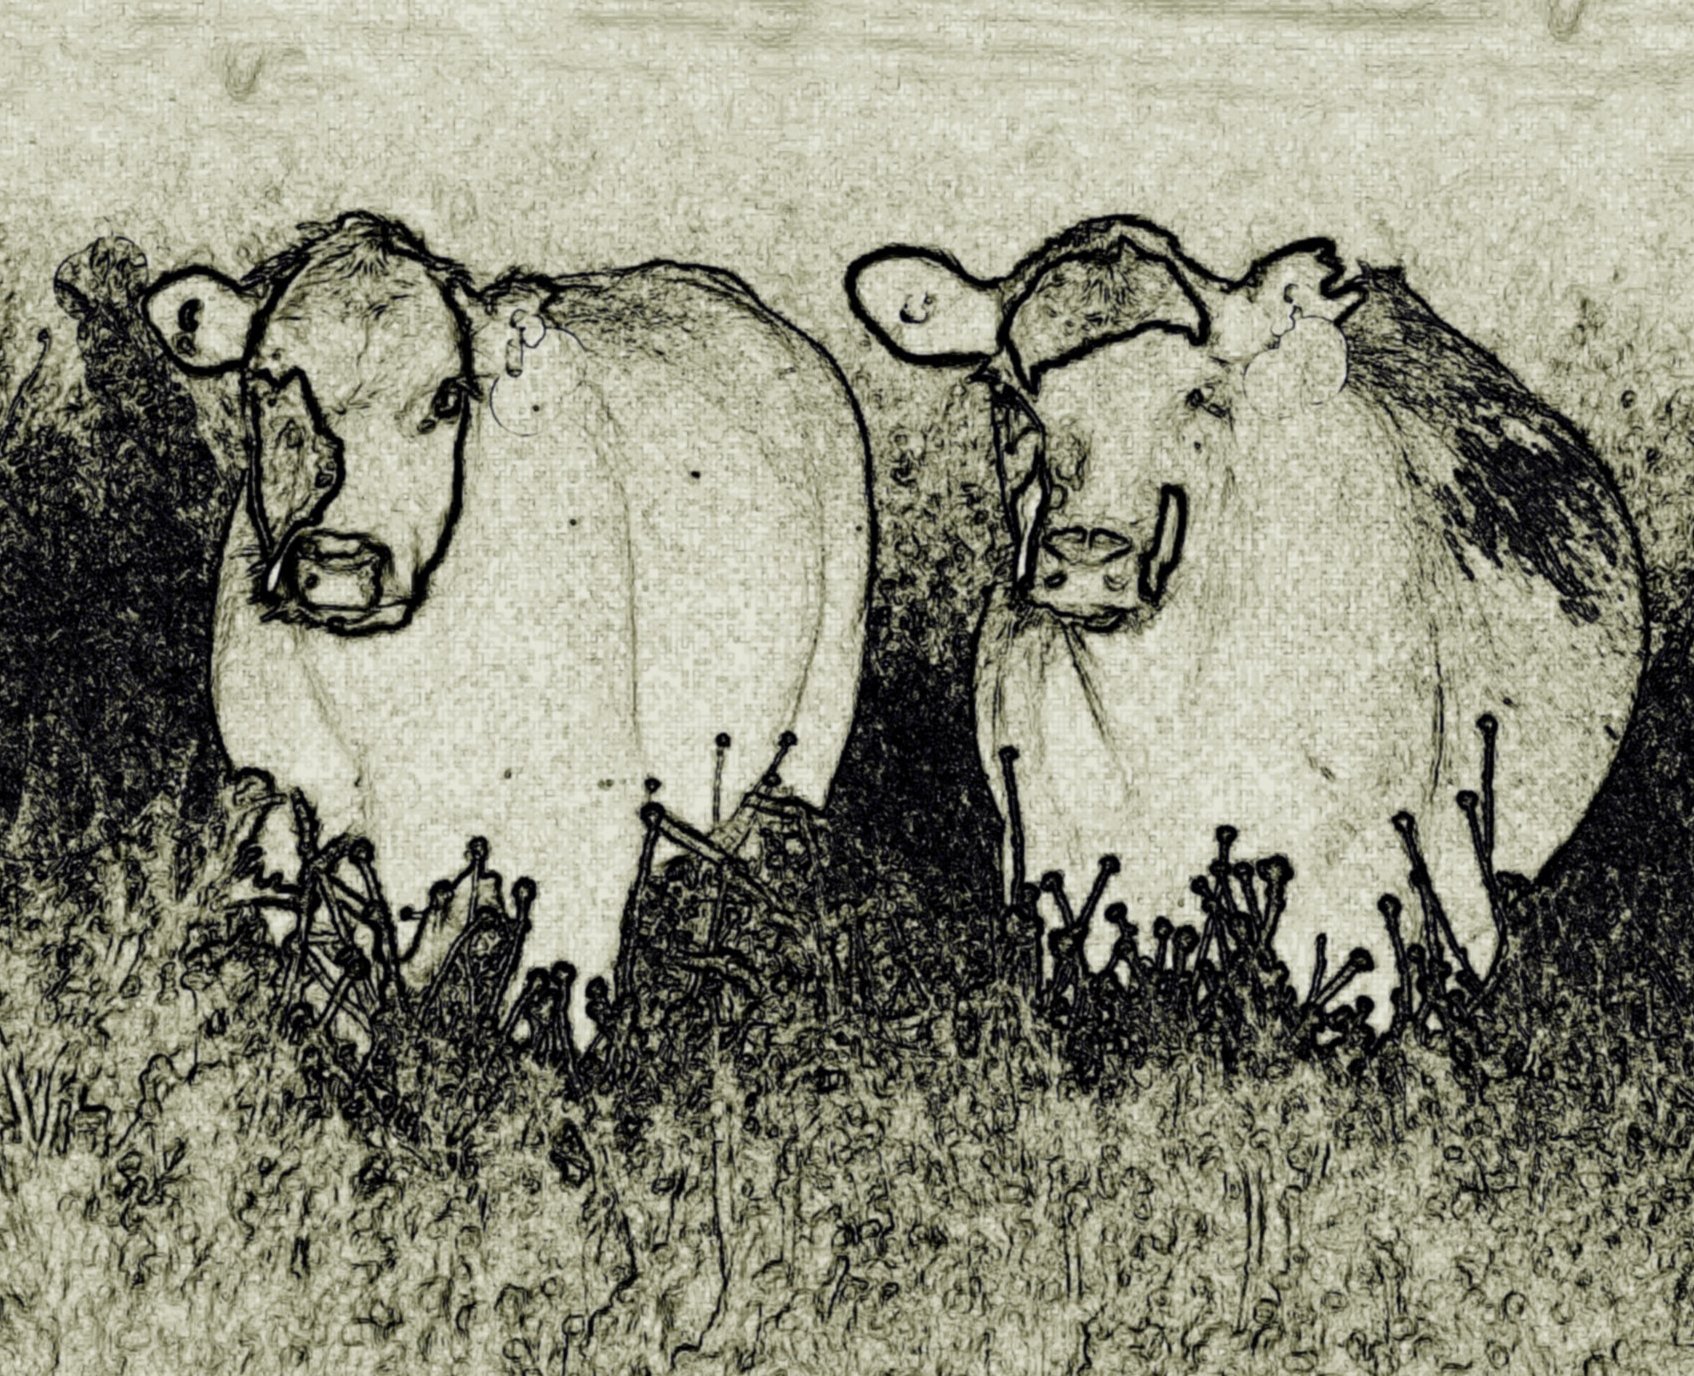 cows finis.jpg